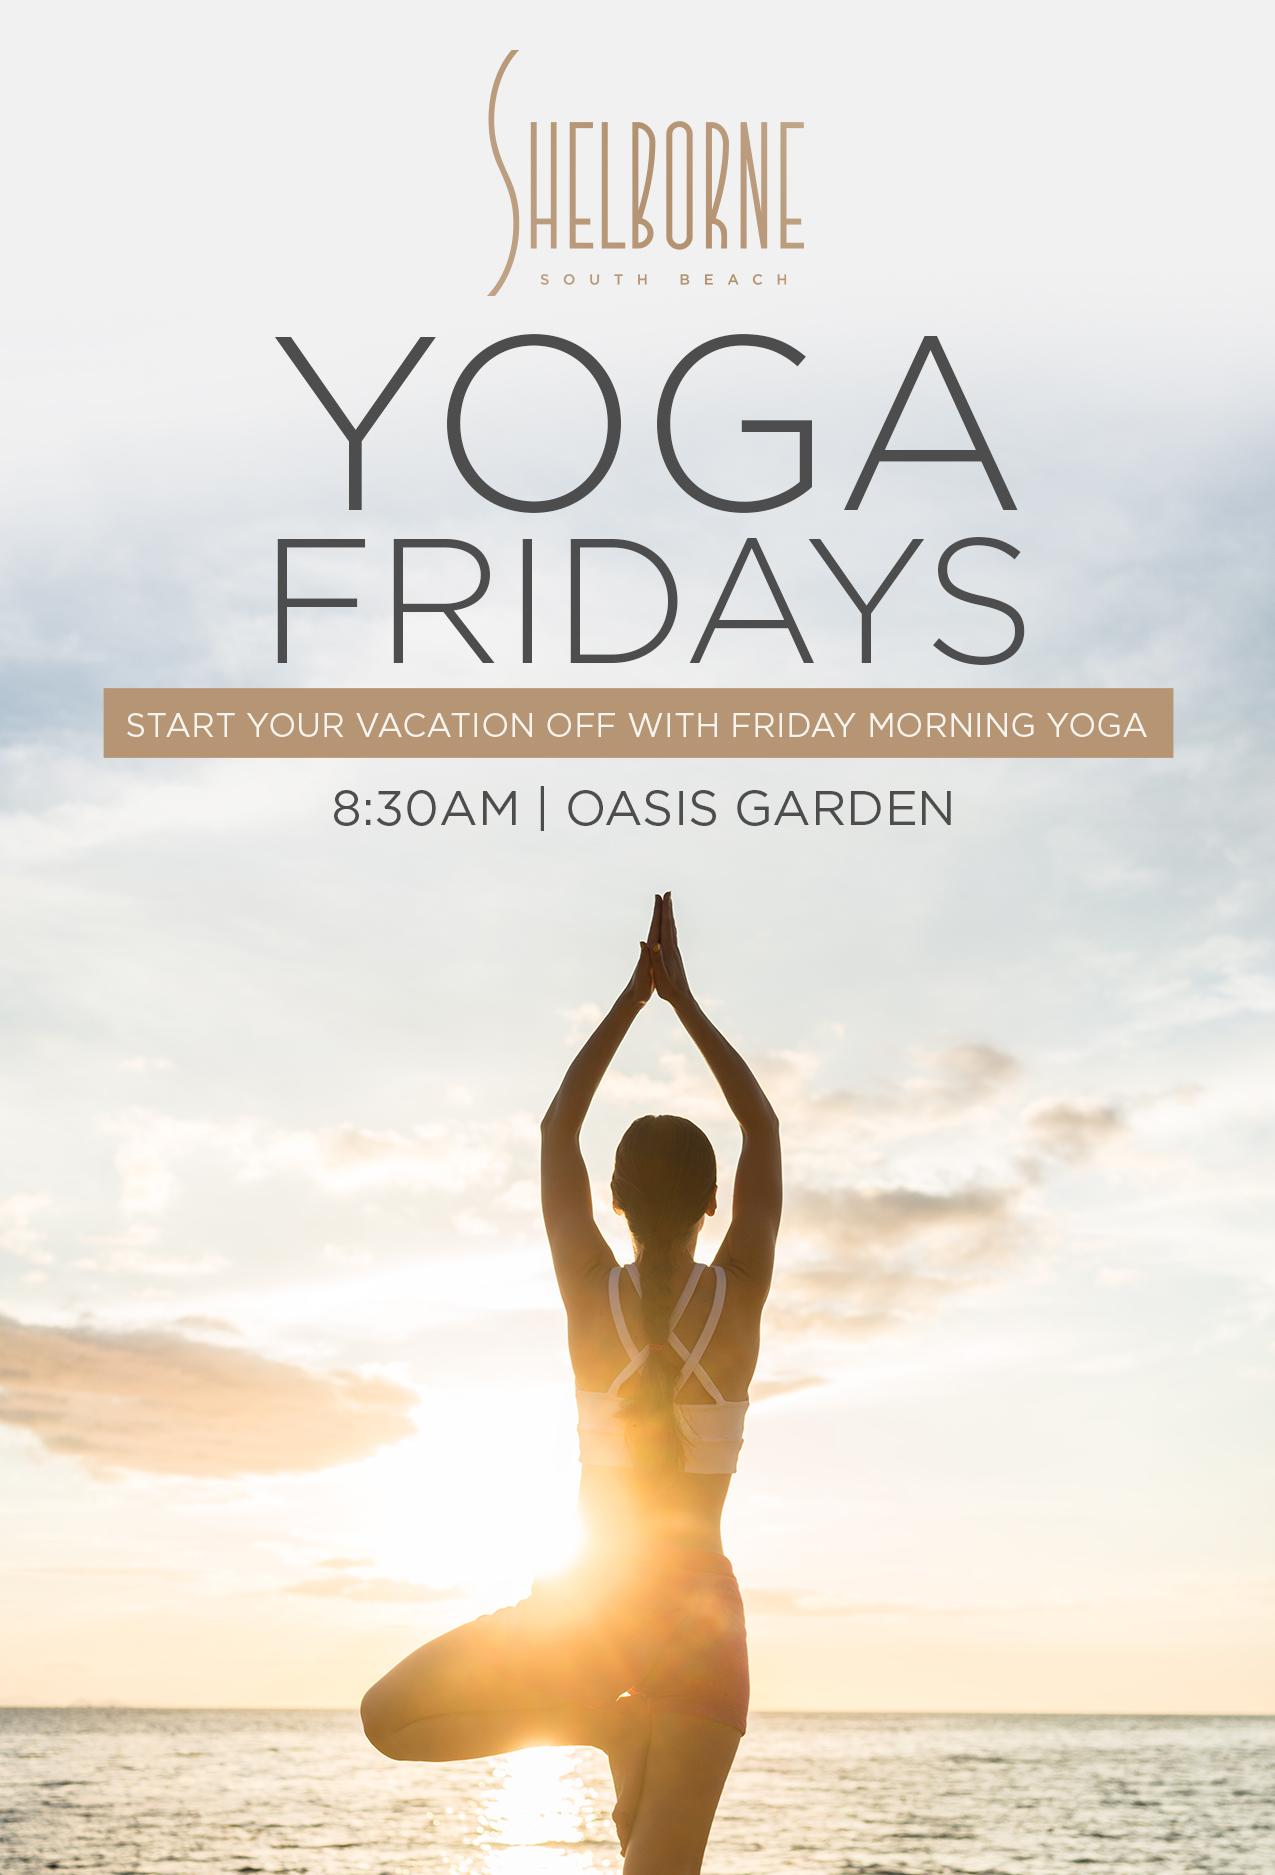 Yoga Fridays at the Shelborne South Beach